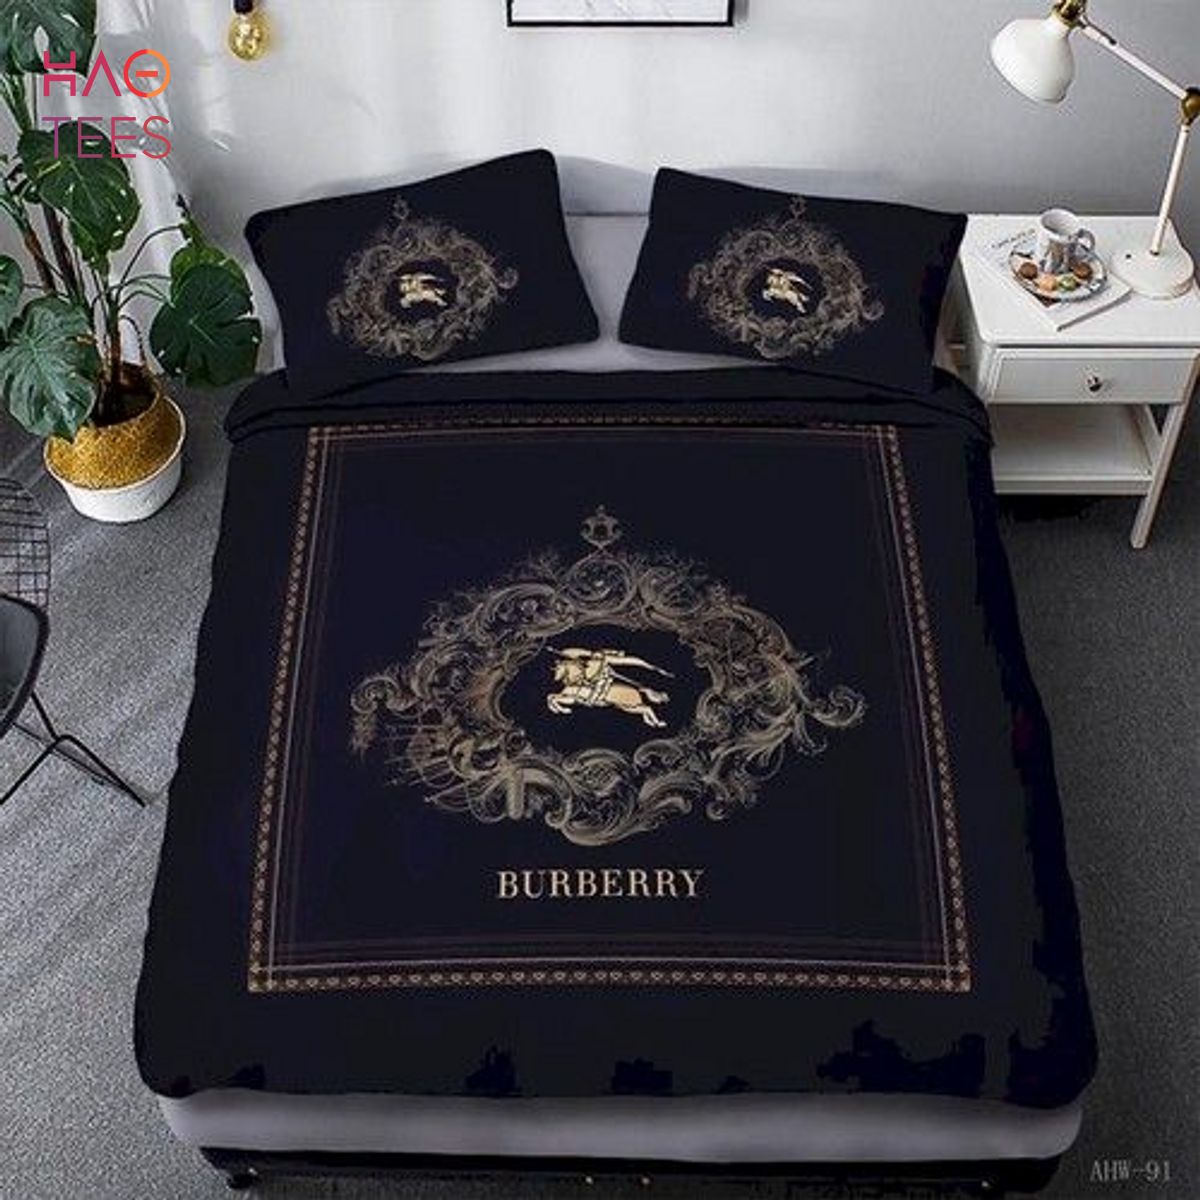 HOT Burberry Full Black Luxury Color Bedding Set